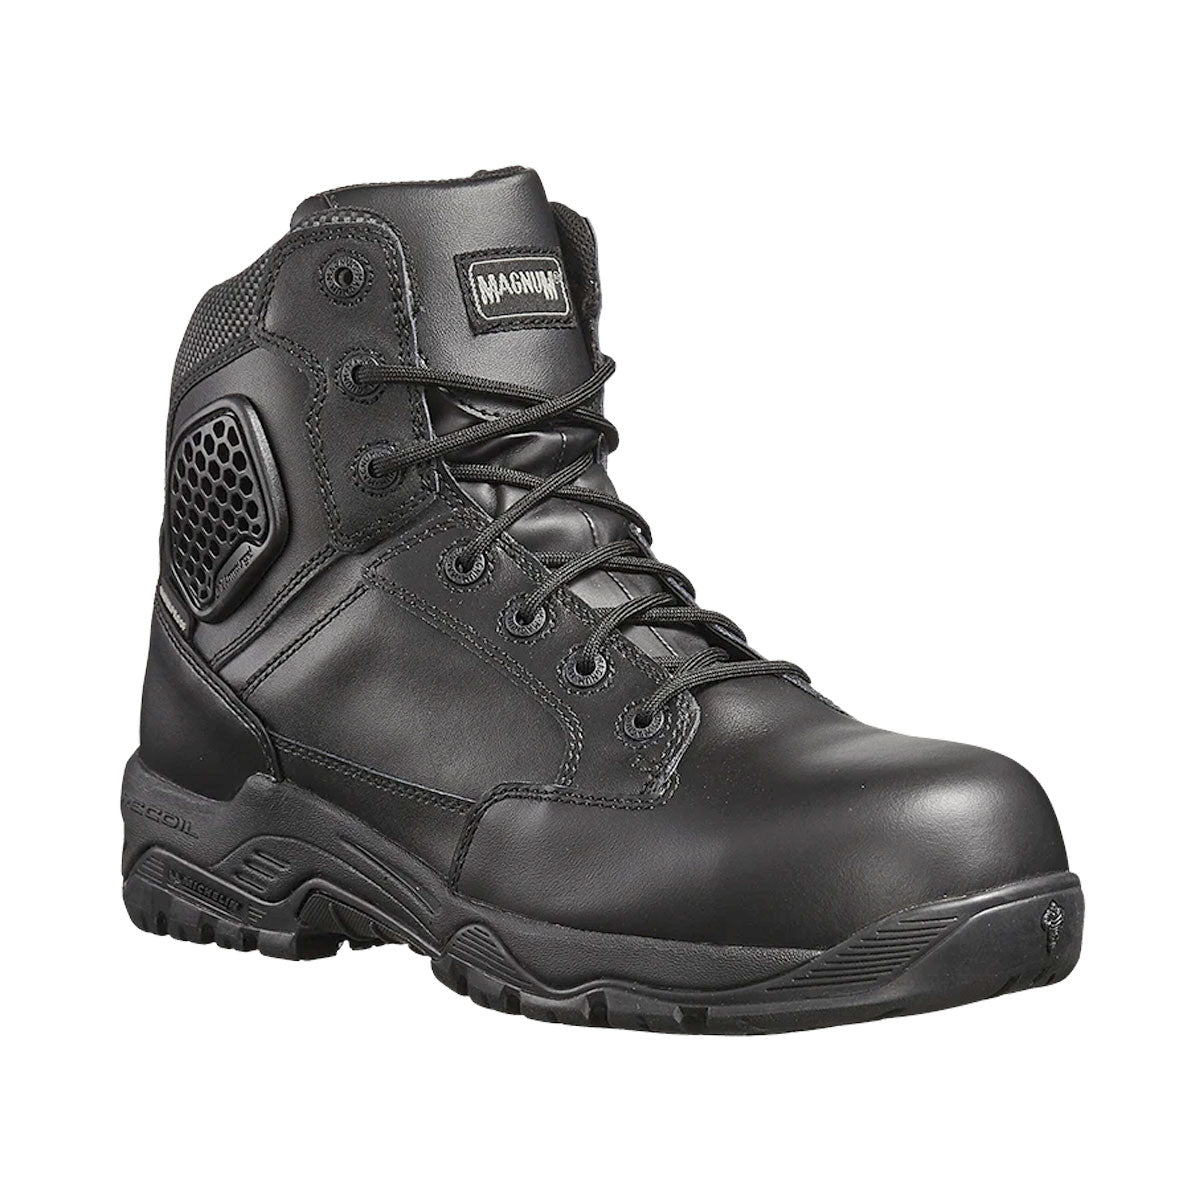 Magnum Strike Force 6.0 Leather Side-Zip Composite Toe Waterproof Women's Boot Black MSF655 Footwear Magnum Footwear Tactical Gear Supplier Tactical Distributors Australia